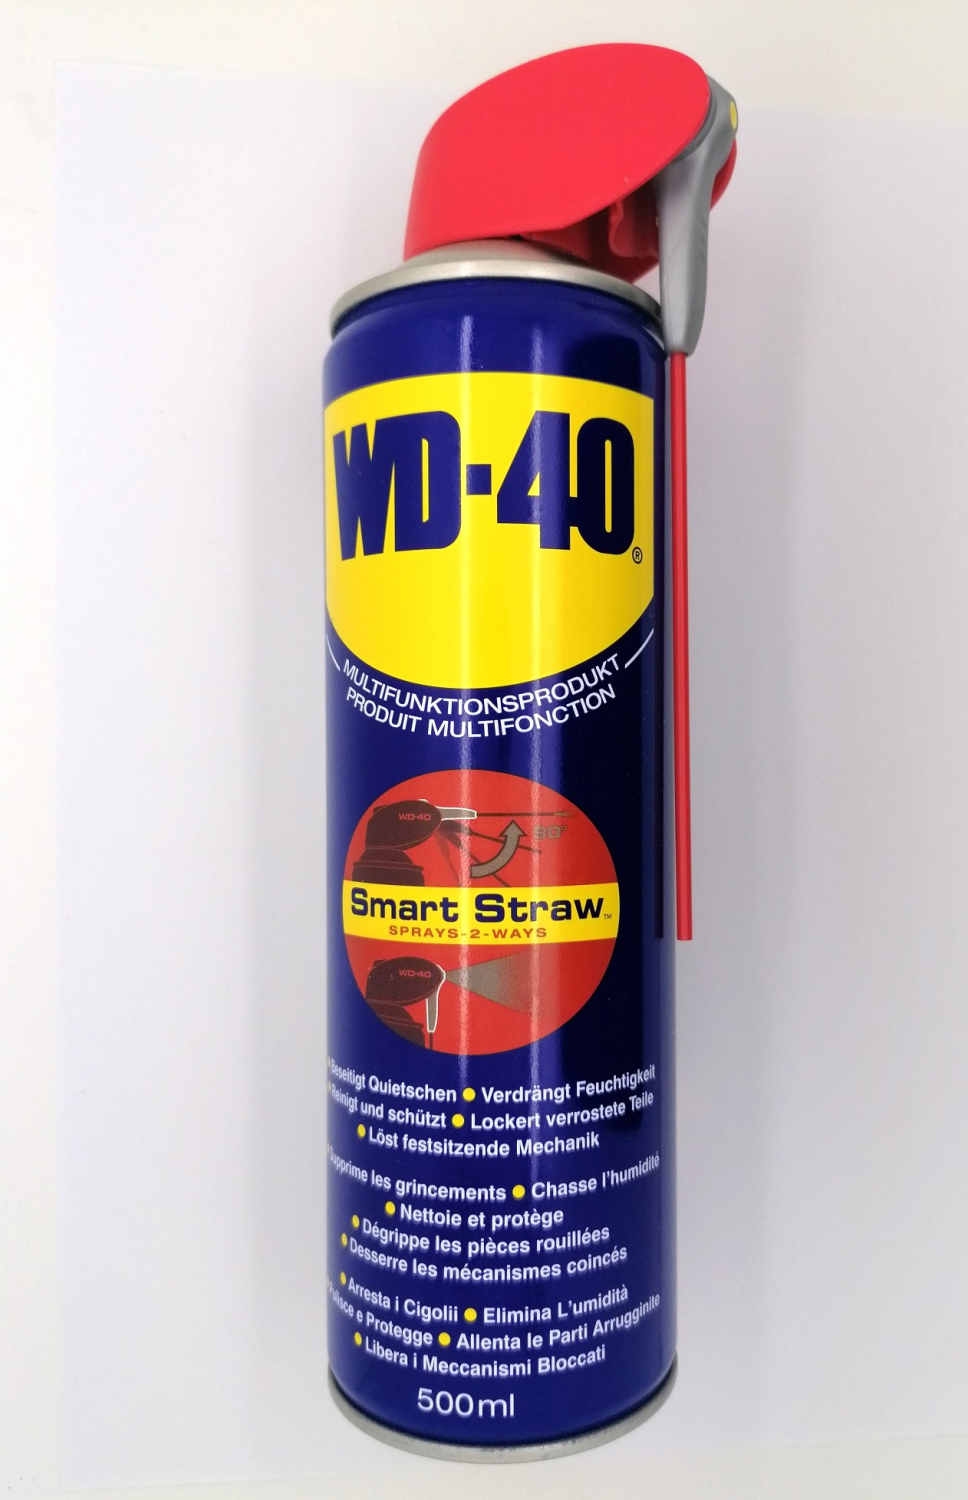 WD-40 Multi-Spray 500ml - Smart Straw   (17,98€/Liter)